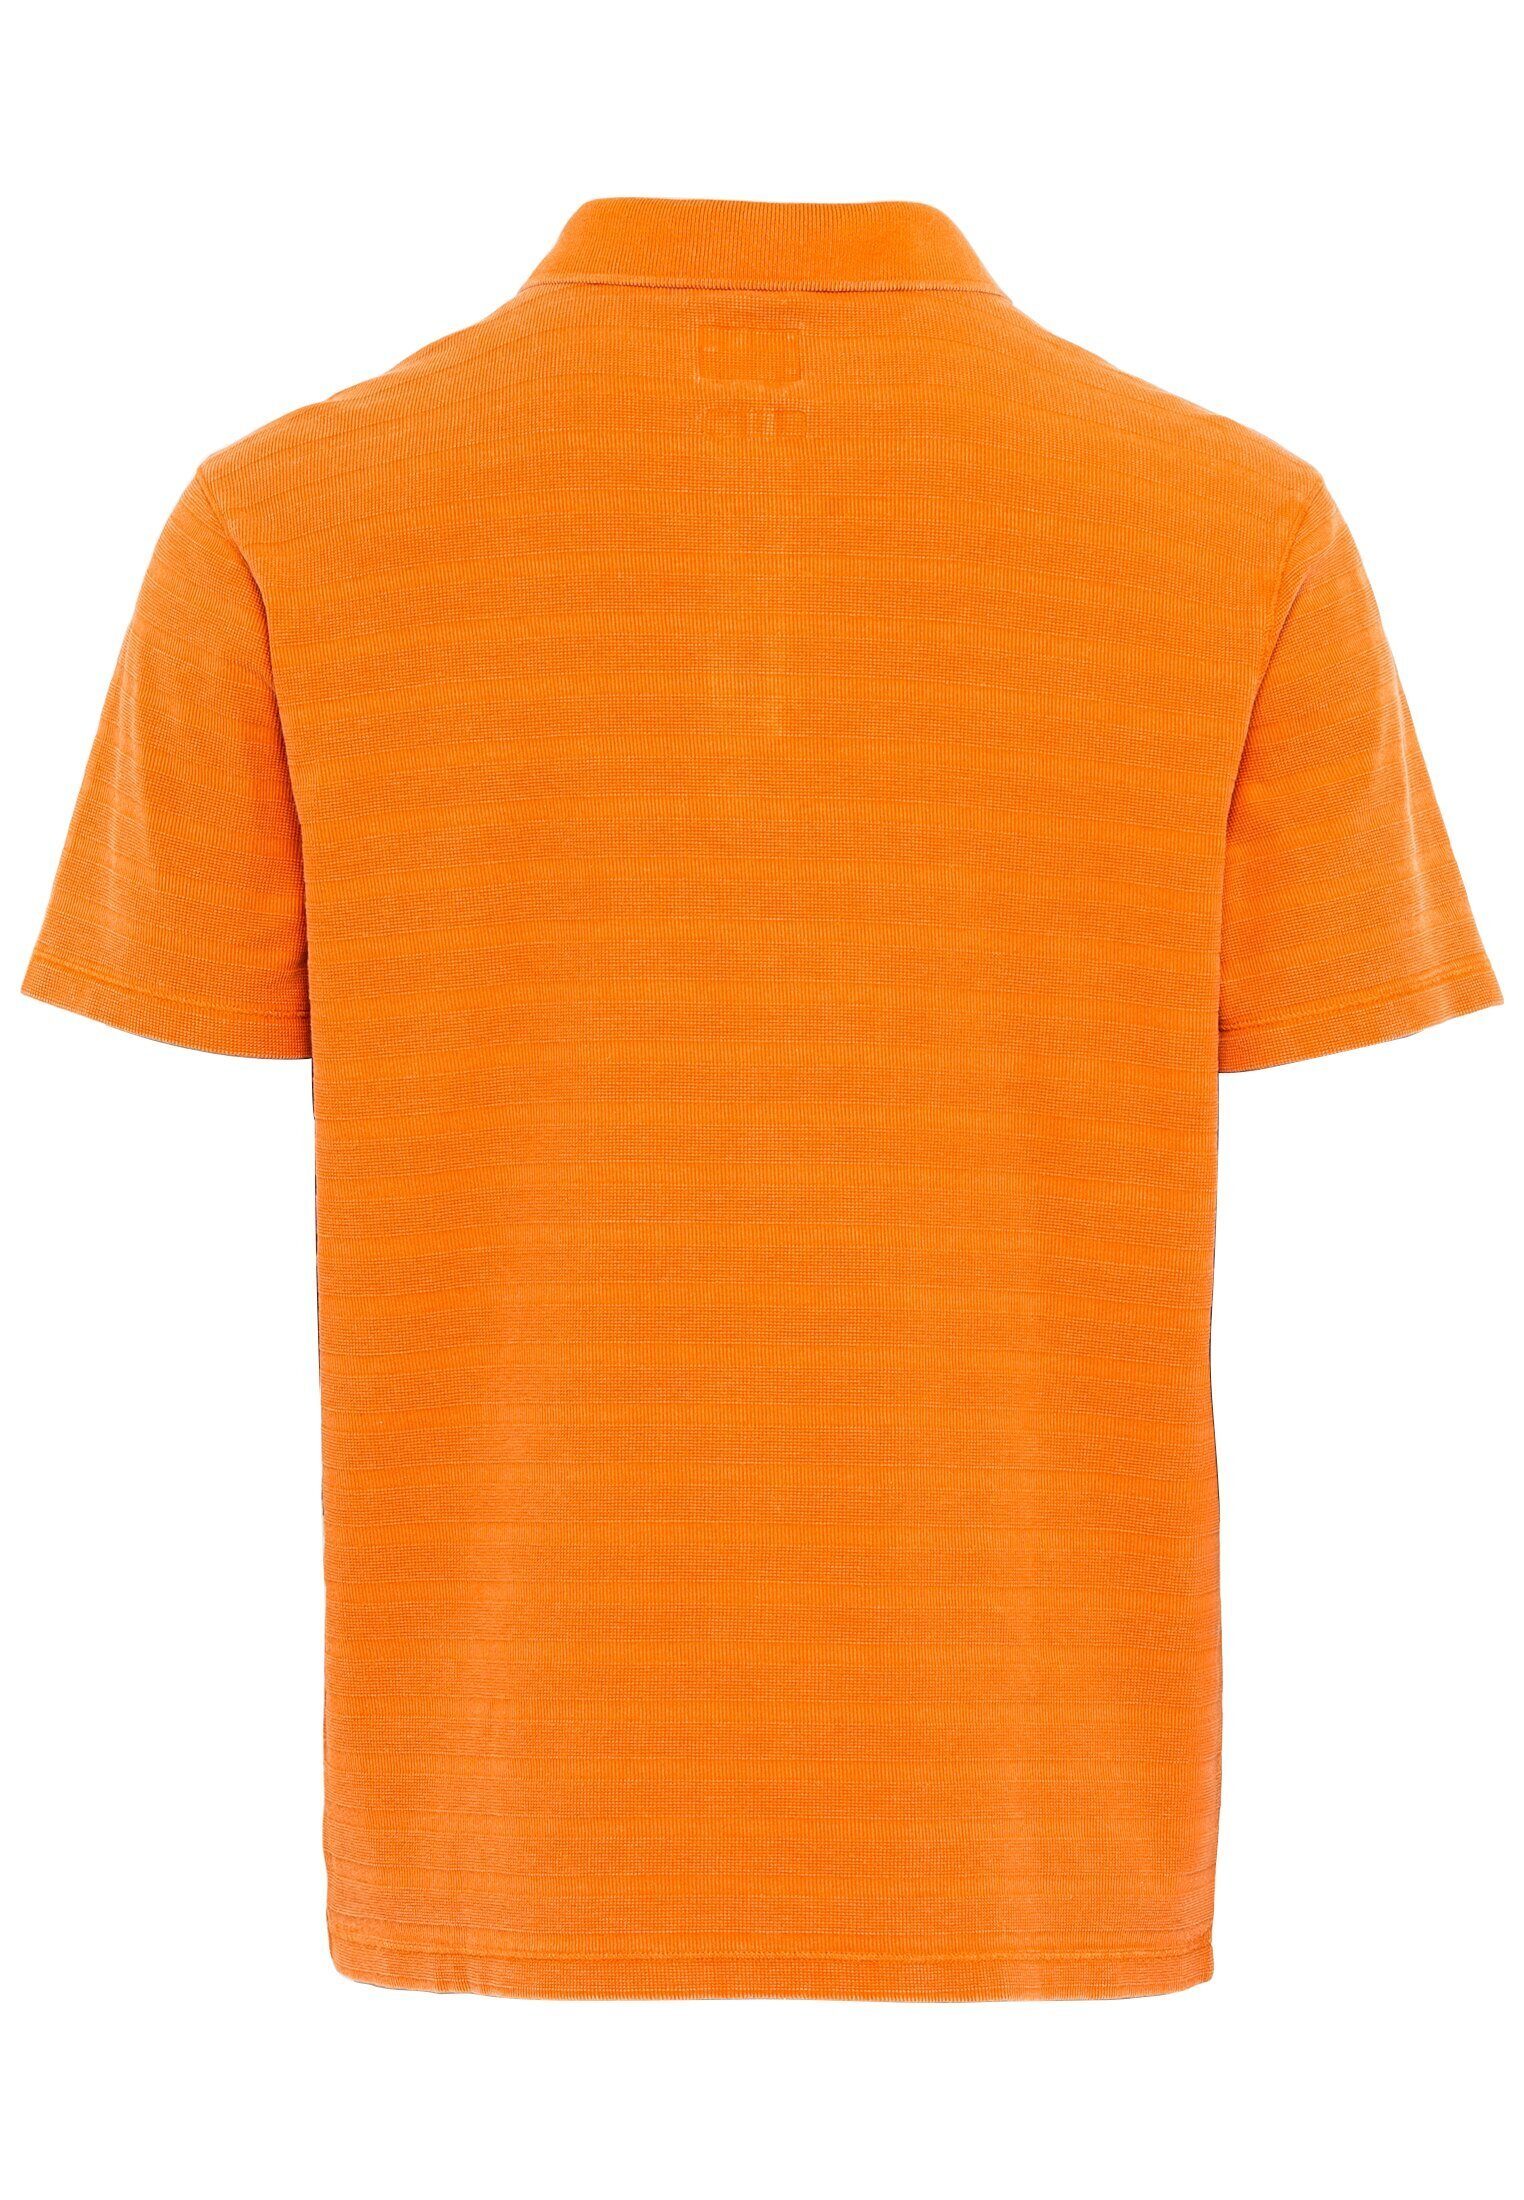 active im camel tonalen Shirts_Poloshirt Orange Poloshirt Streifenmuster